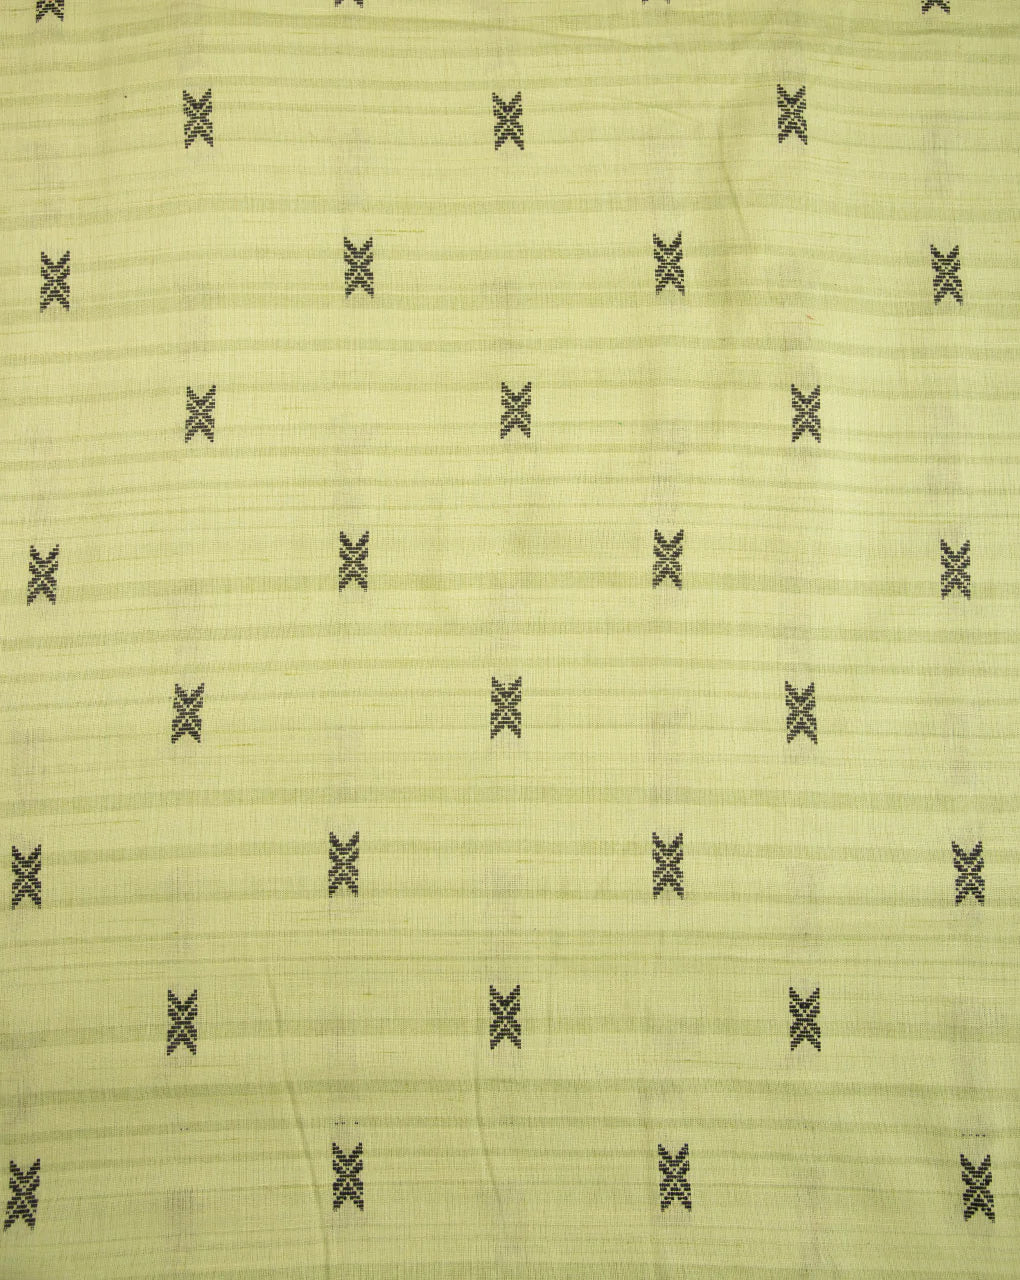 Jacquard Loom Textured Cotton Fabric - Fabriclore.com